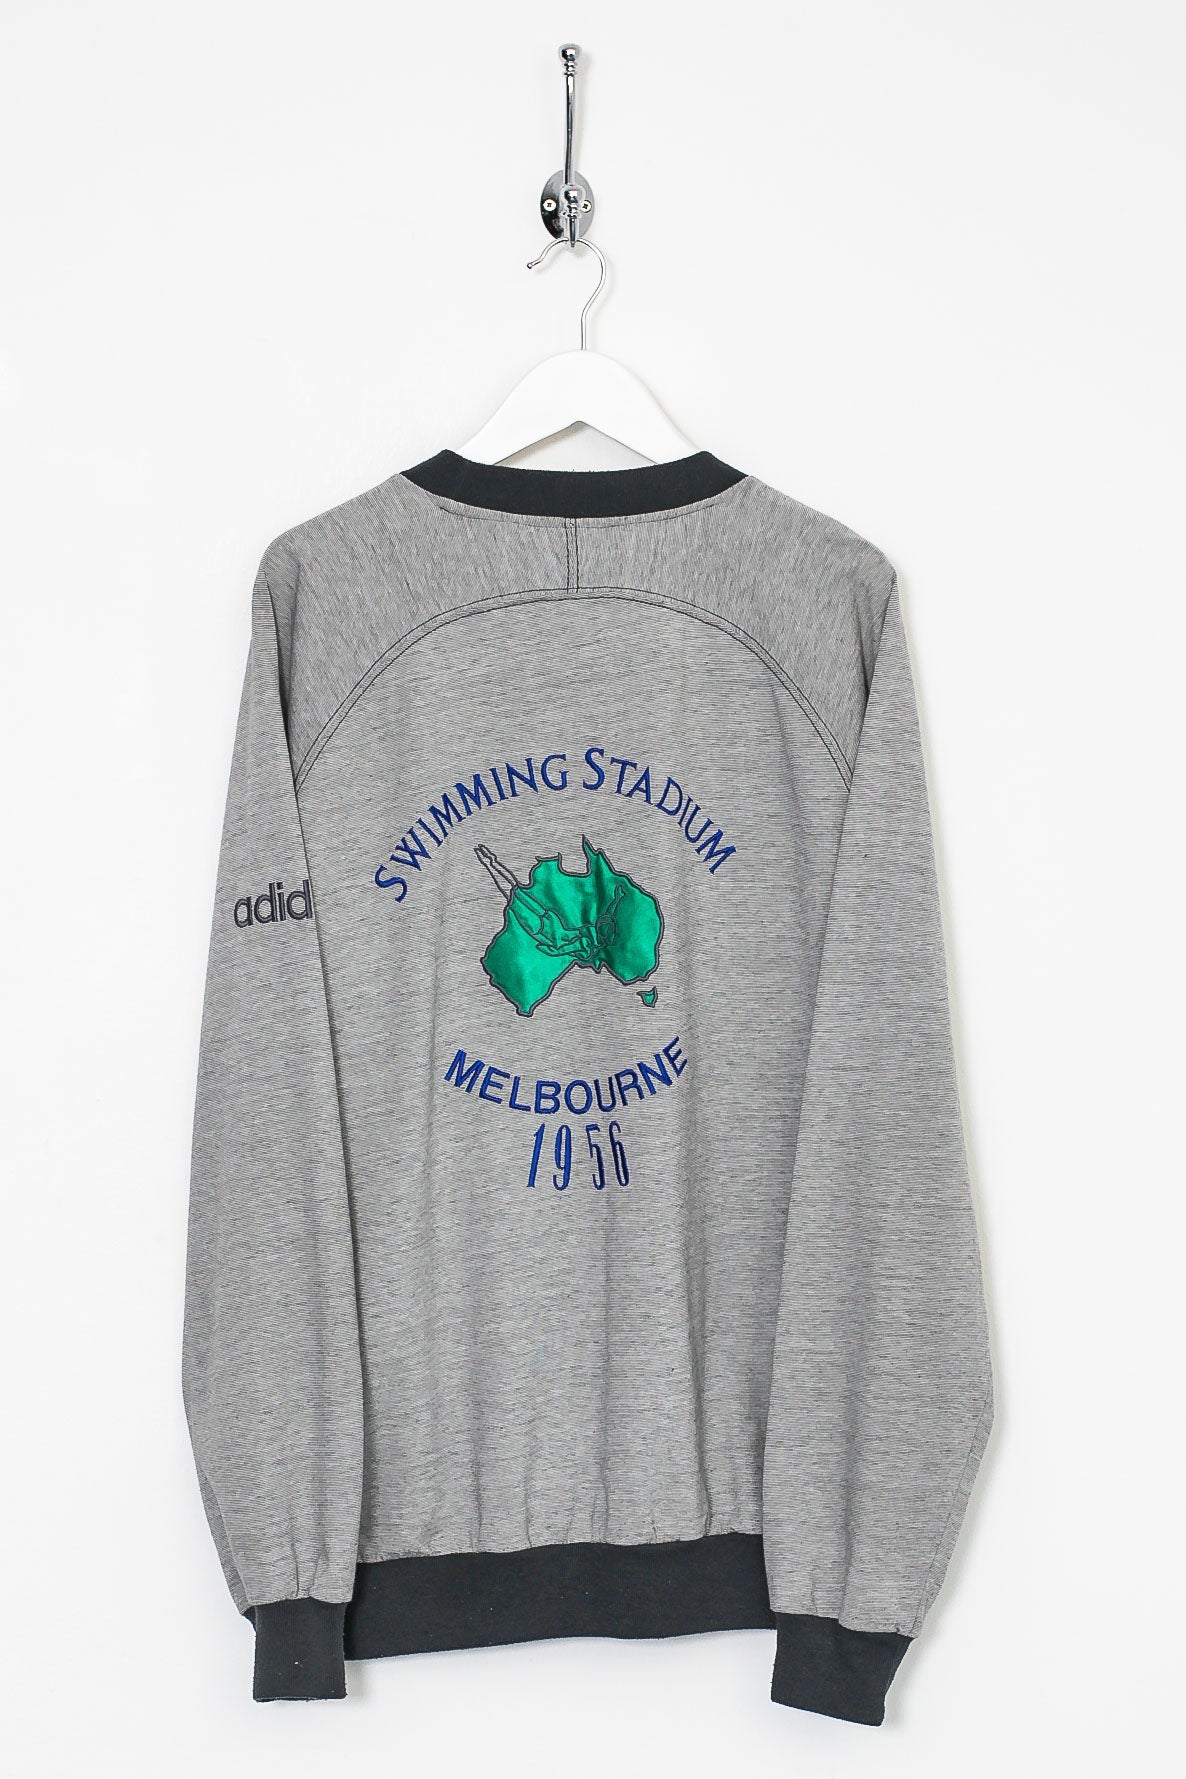 90s Adidas Olympics Sweatshirt (L)